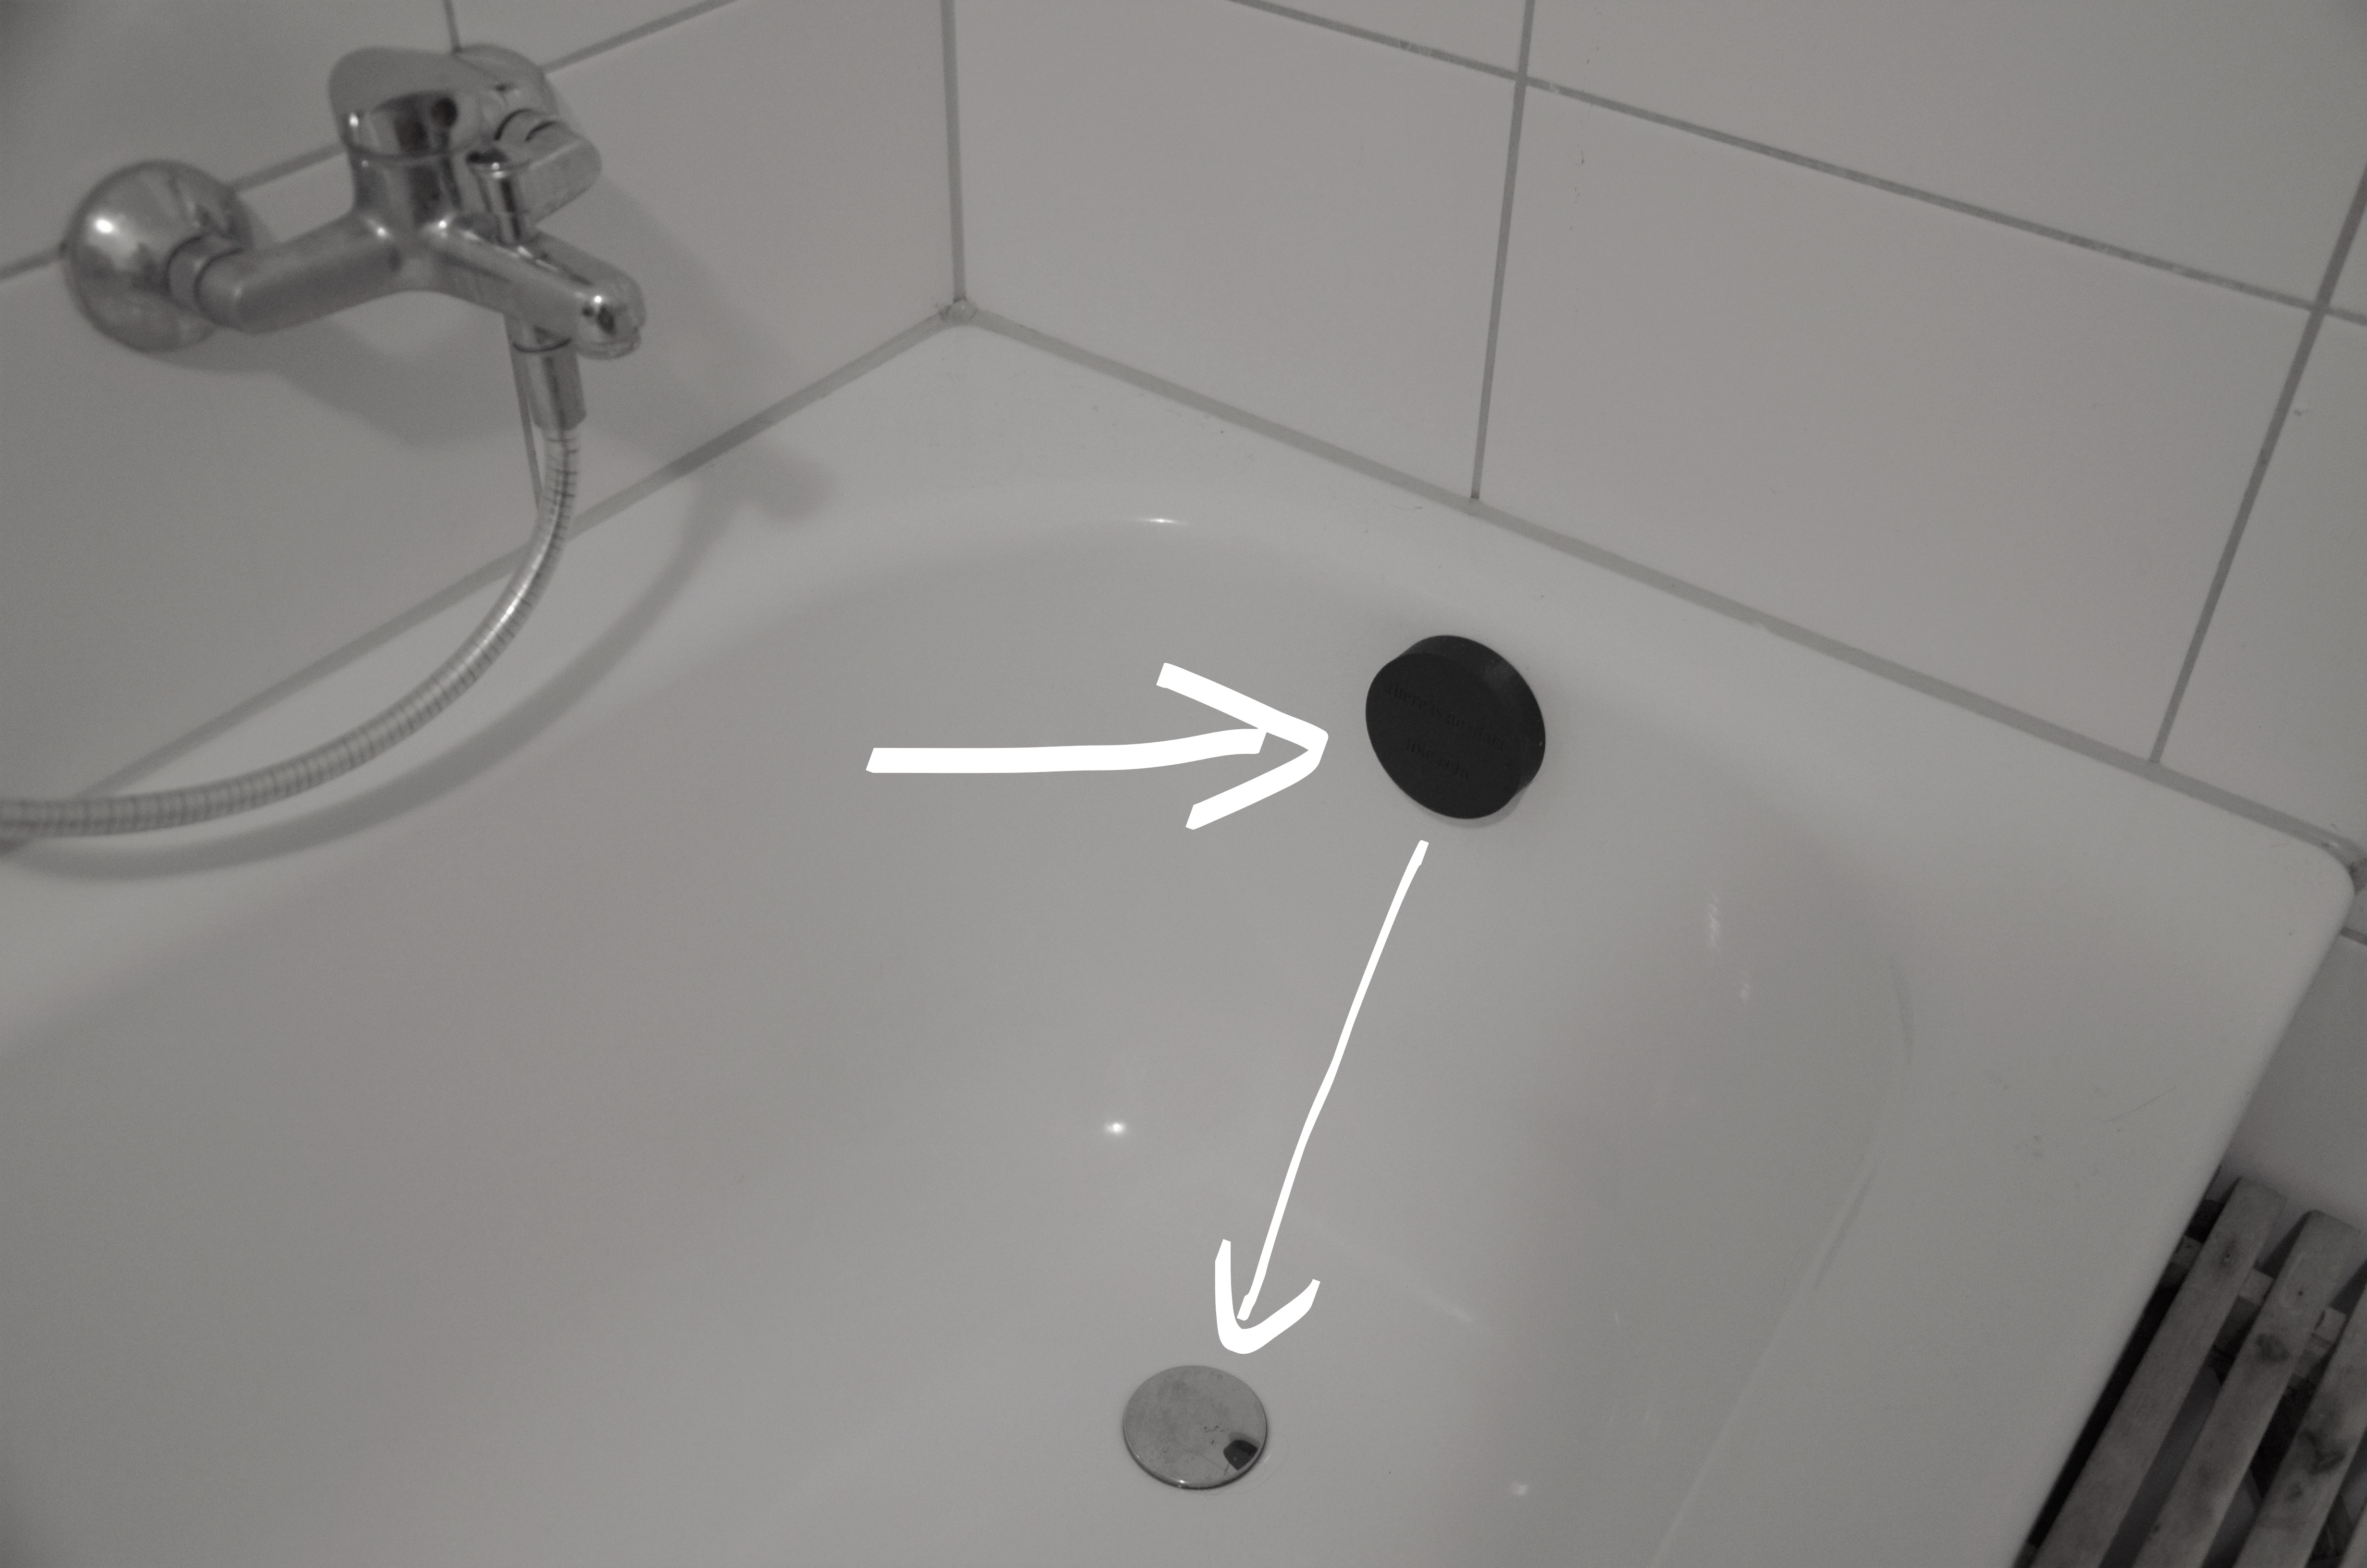 Bathing tub plug lifter knob | Badewannenstöpsel-hebe-knopf